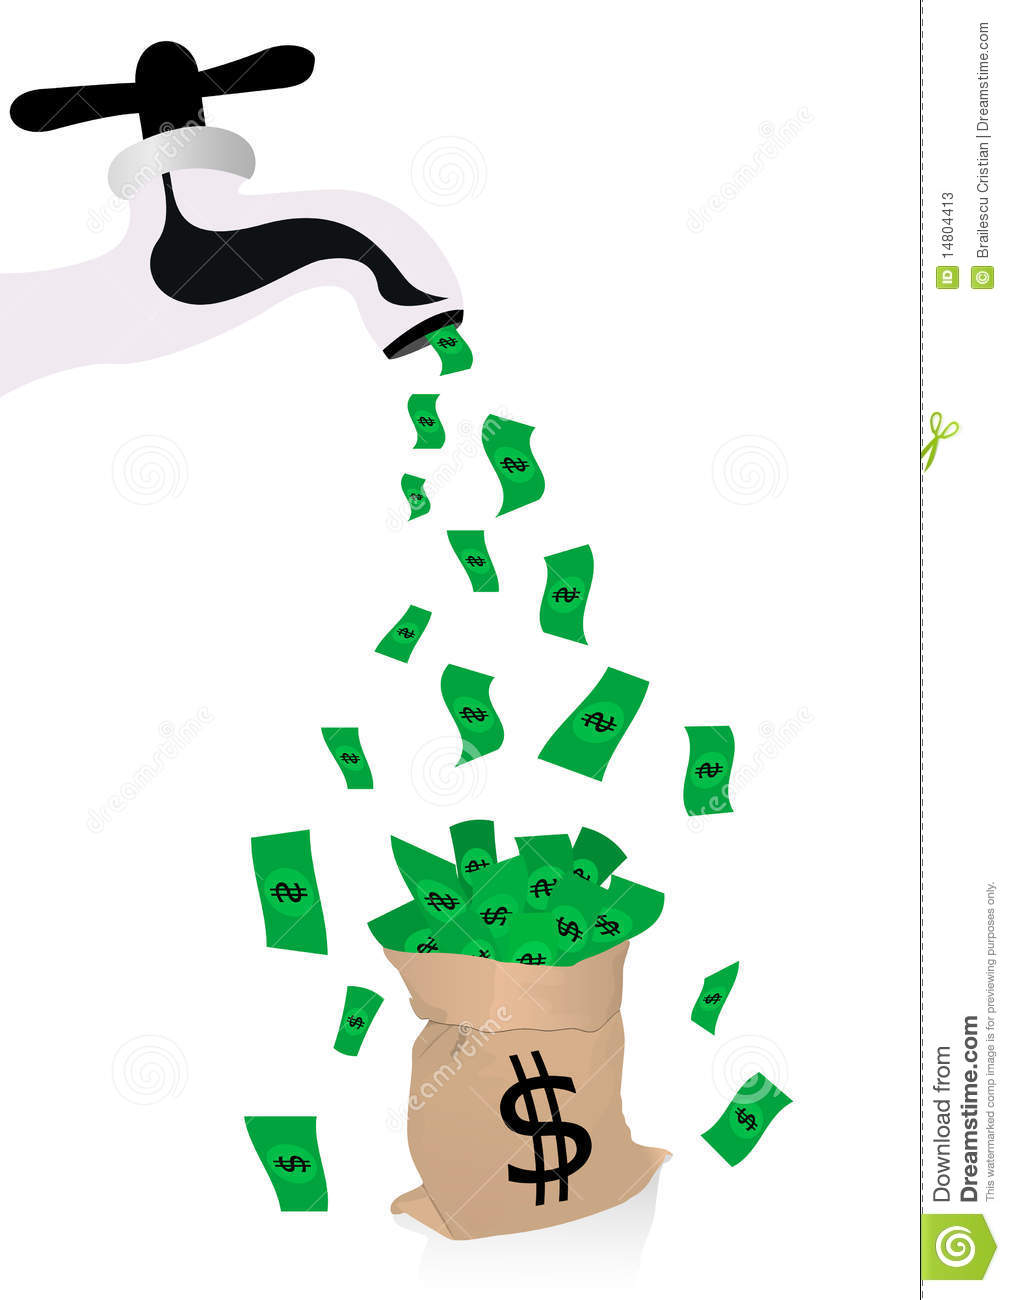 Conceptual Money Illustration With Spigot Stock Photos   Image